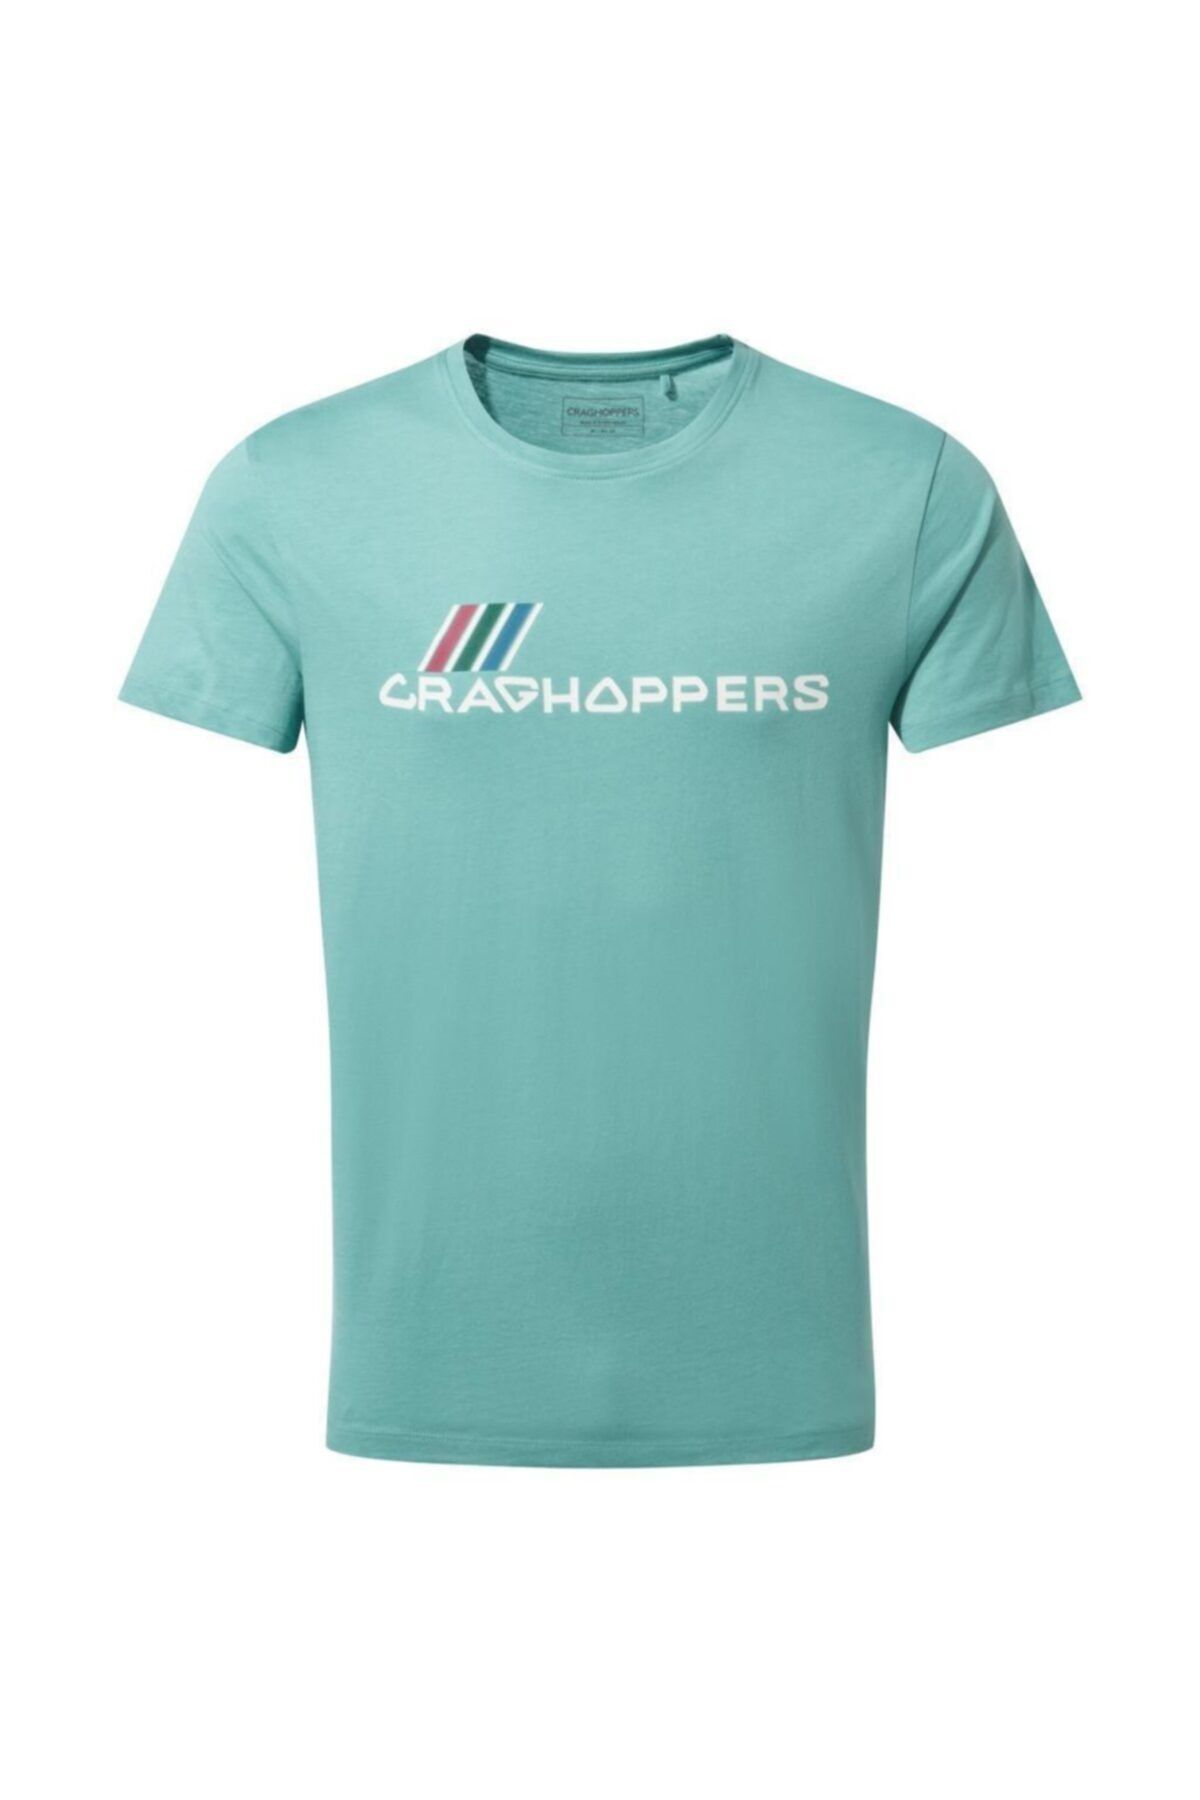 Craghoppers Mightie Erkek T-shirt Mavi